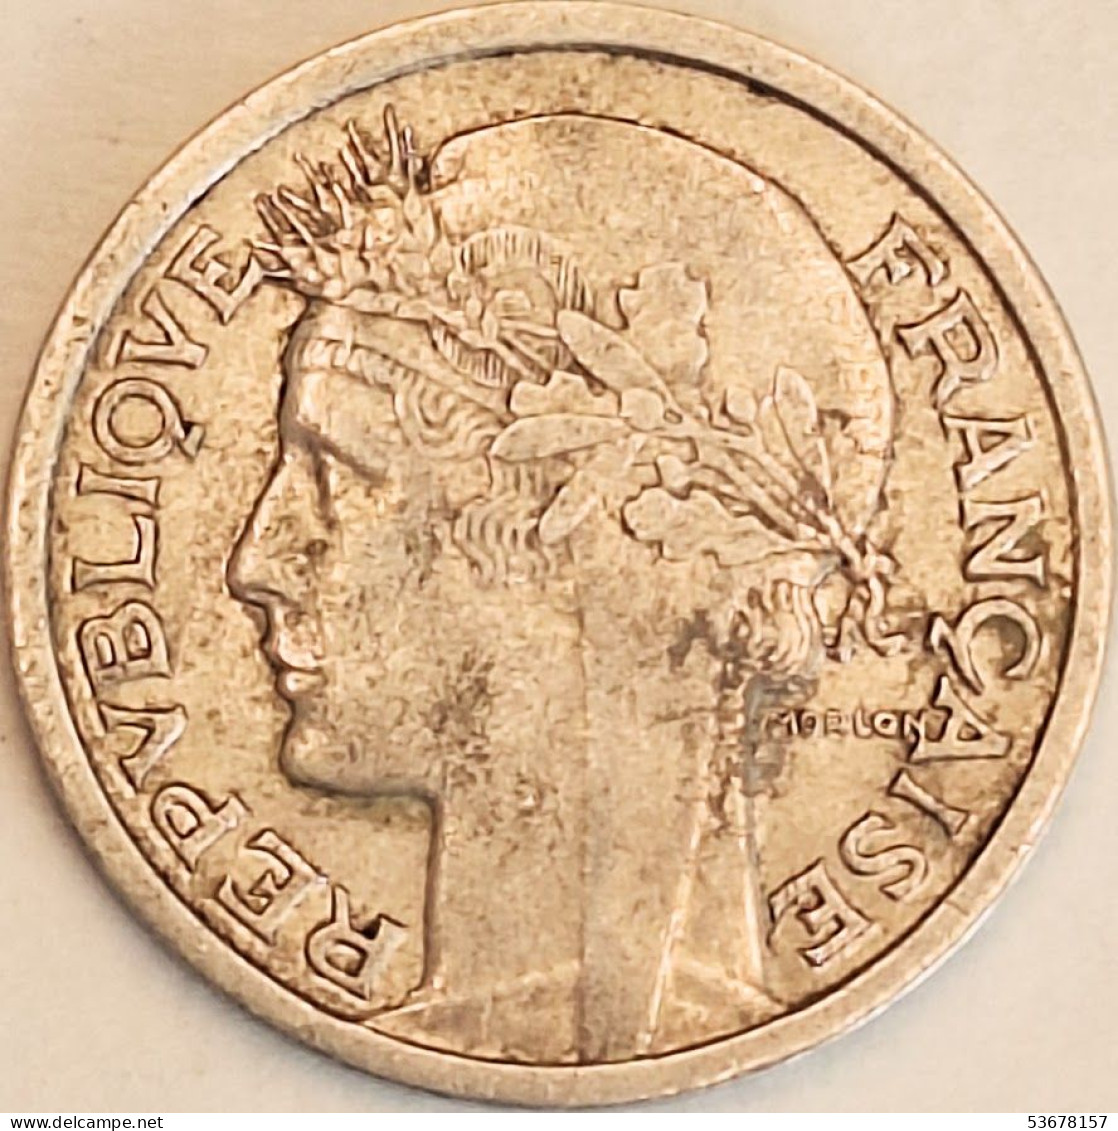 France - Franc 1958, KM# 885a.1 (#4088) - 1 Franc